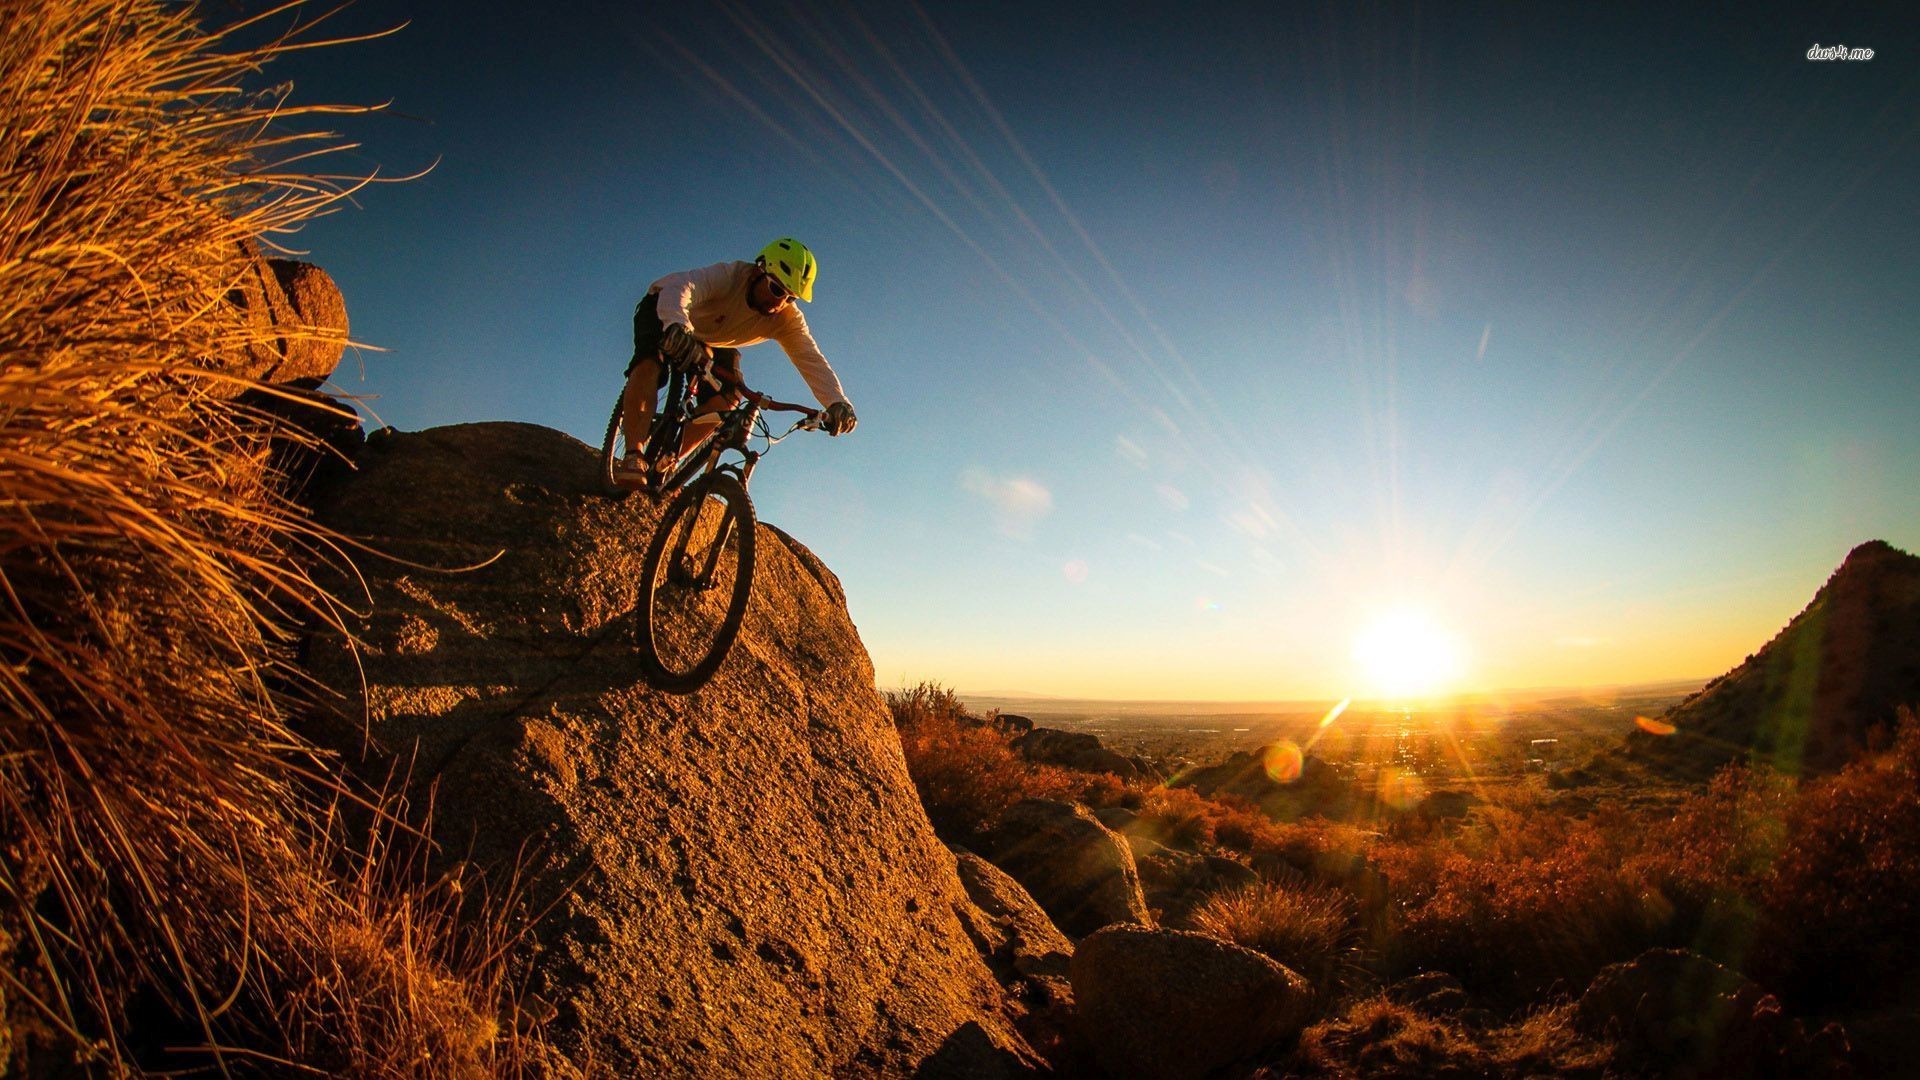 hd bike wallpapers 1920x1080,mountain bike,sky,extreme sport,mountain biking,adventure